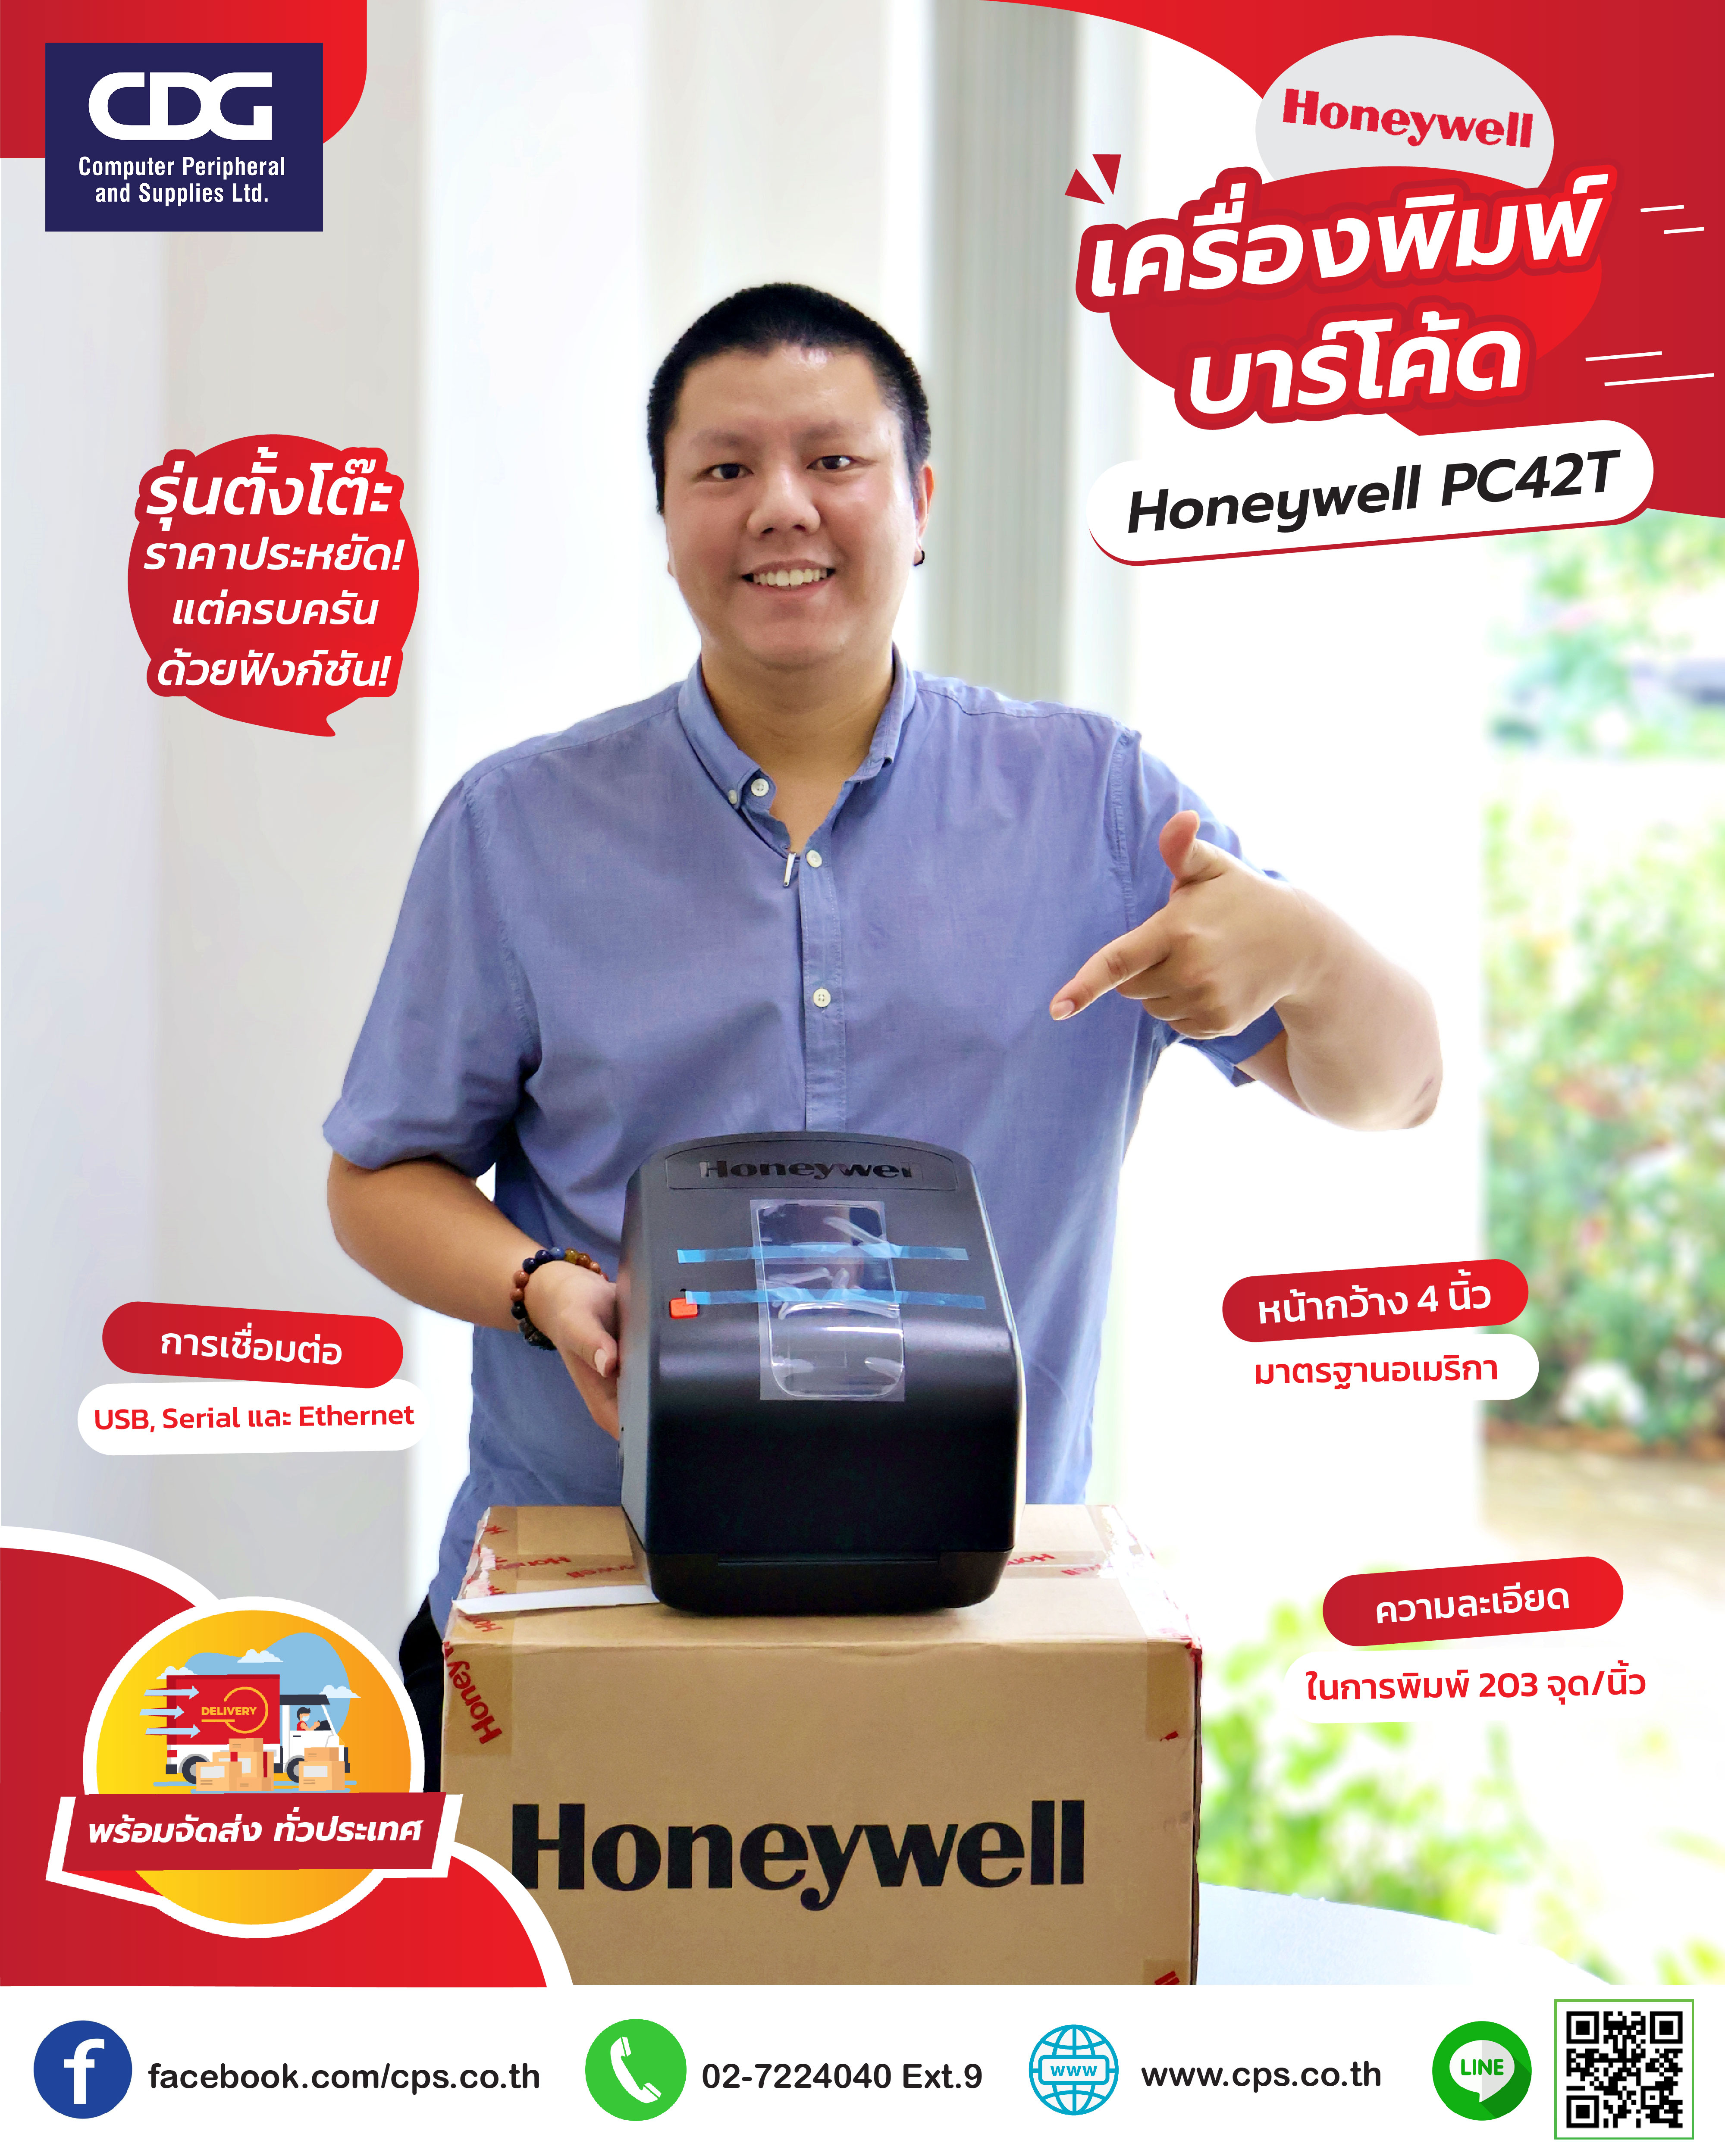 Honeywell PC42T